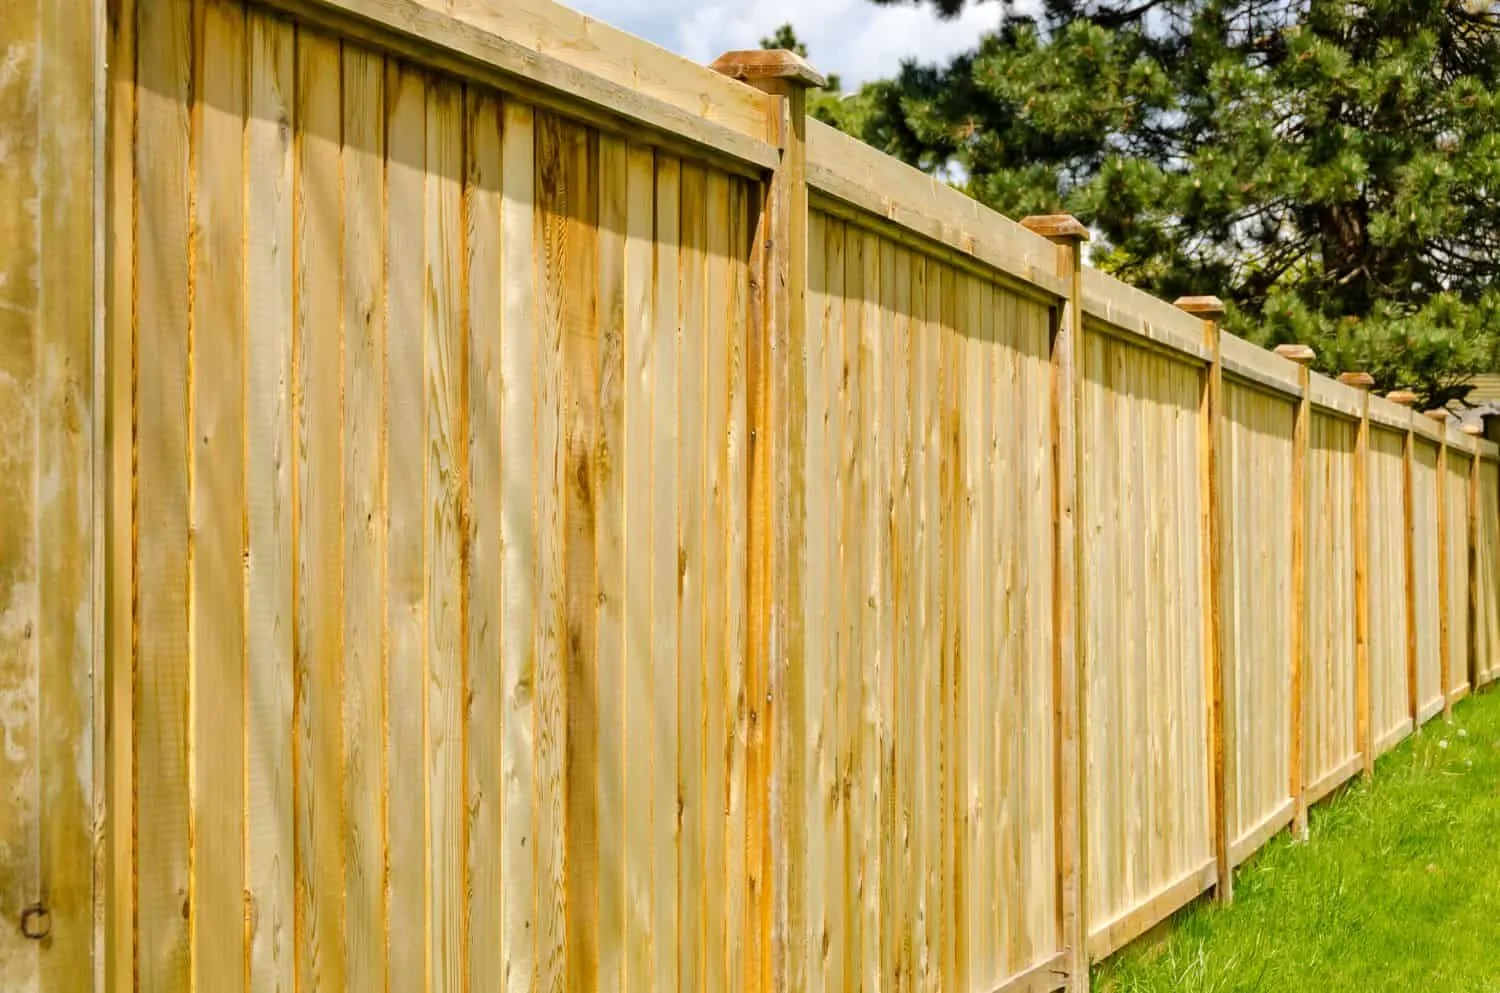 Should You Install A Garden Fence?